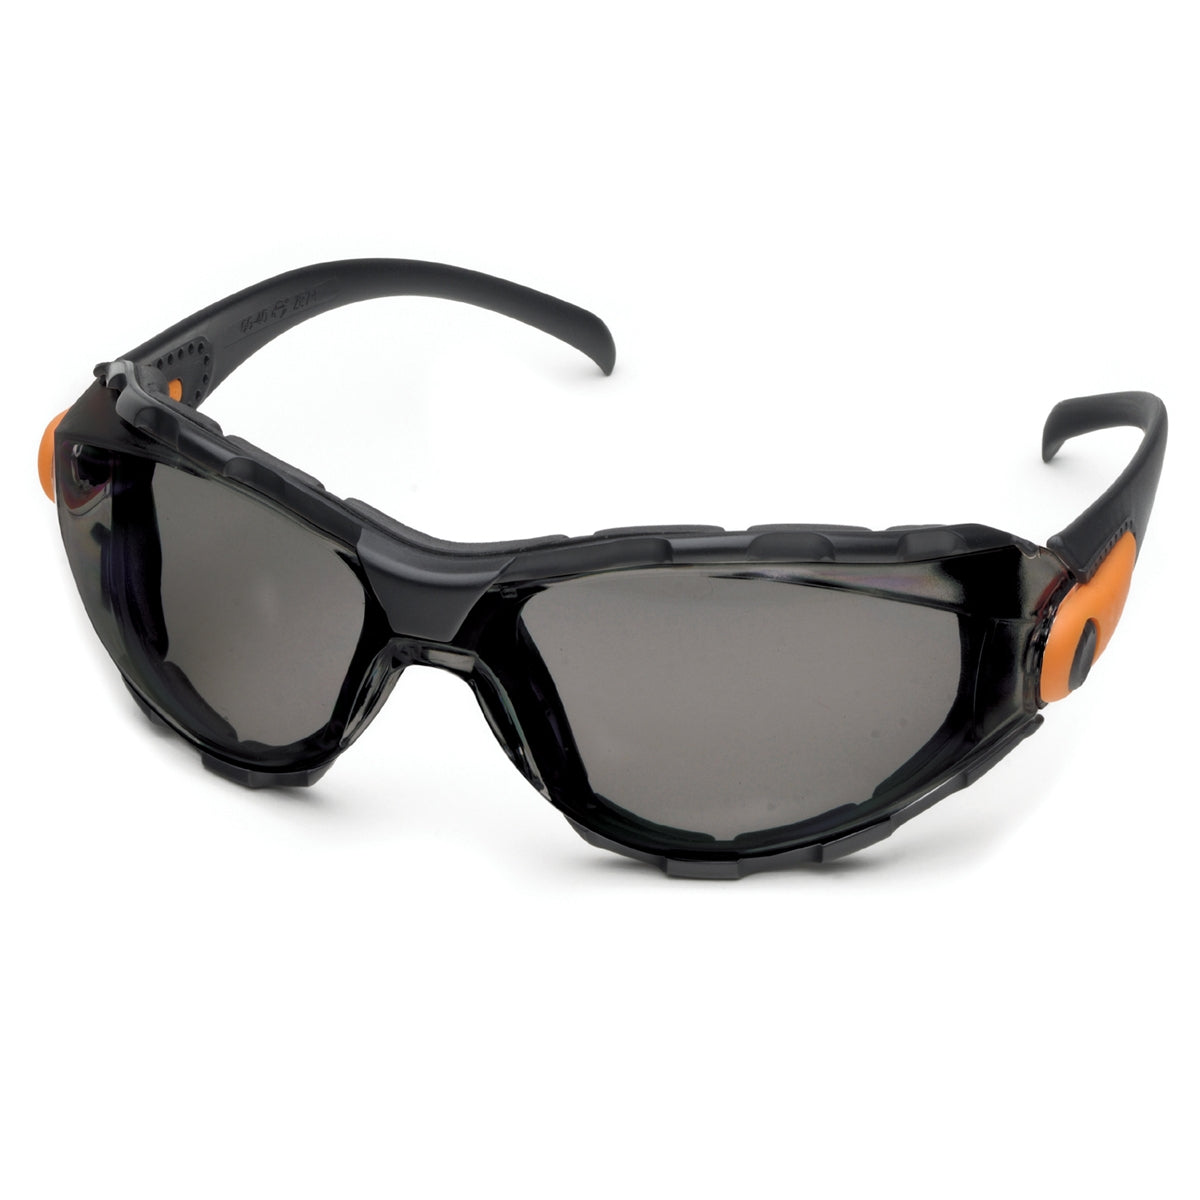 Elvex Go-Specs Safety Glasses